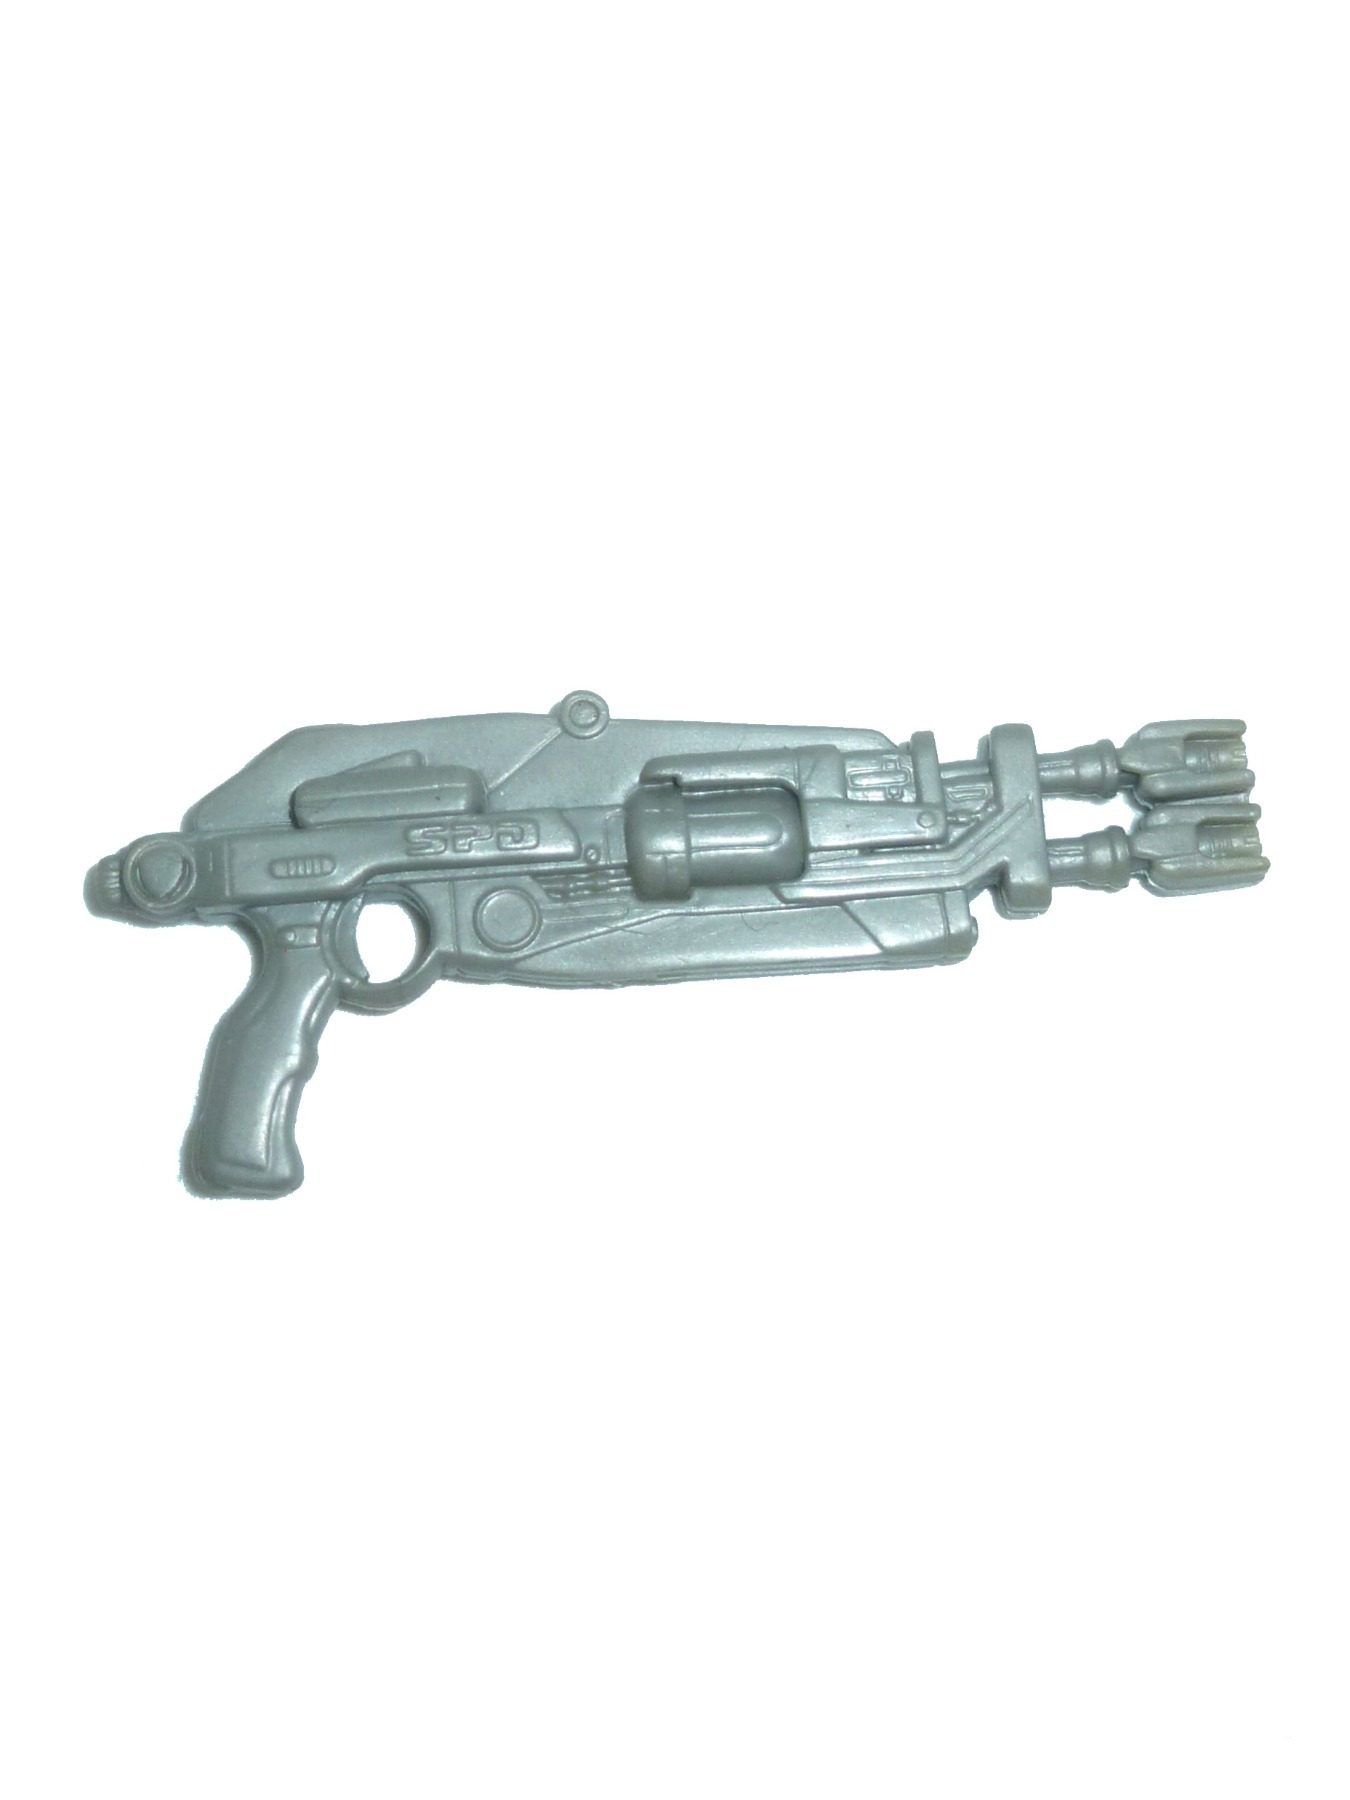 Delta Enforcer - Waffe Bandai 2005